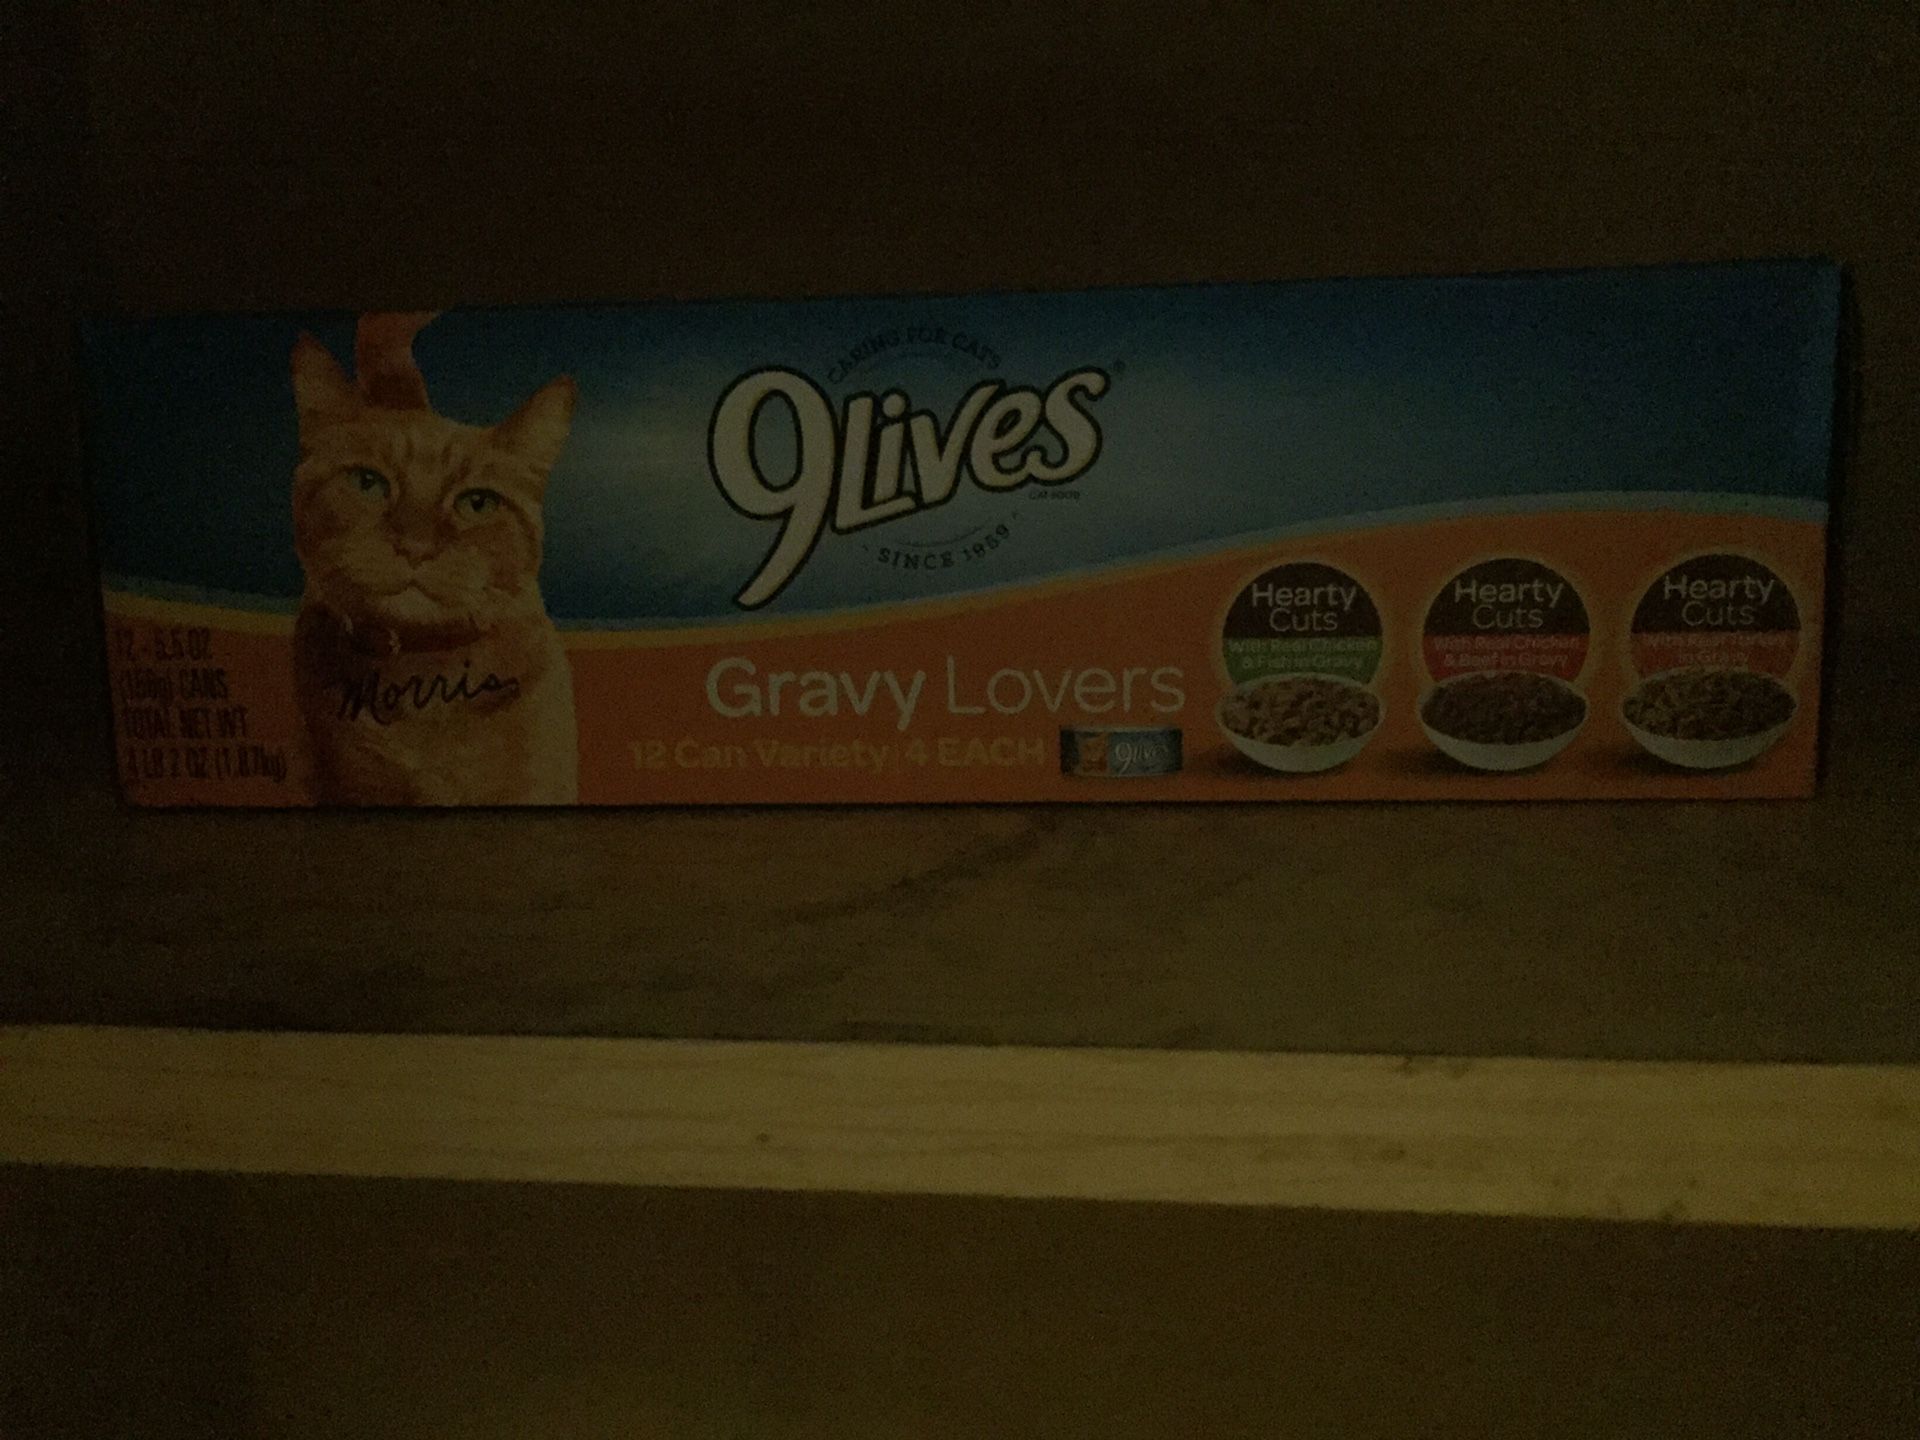 9lives gravy lovers cat food